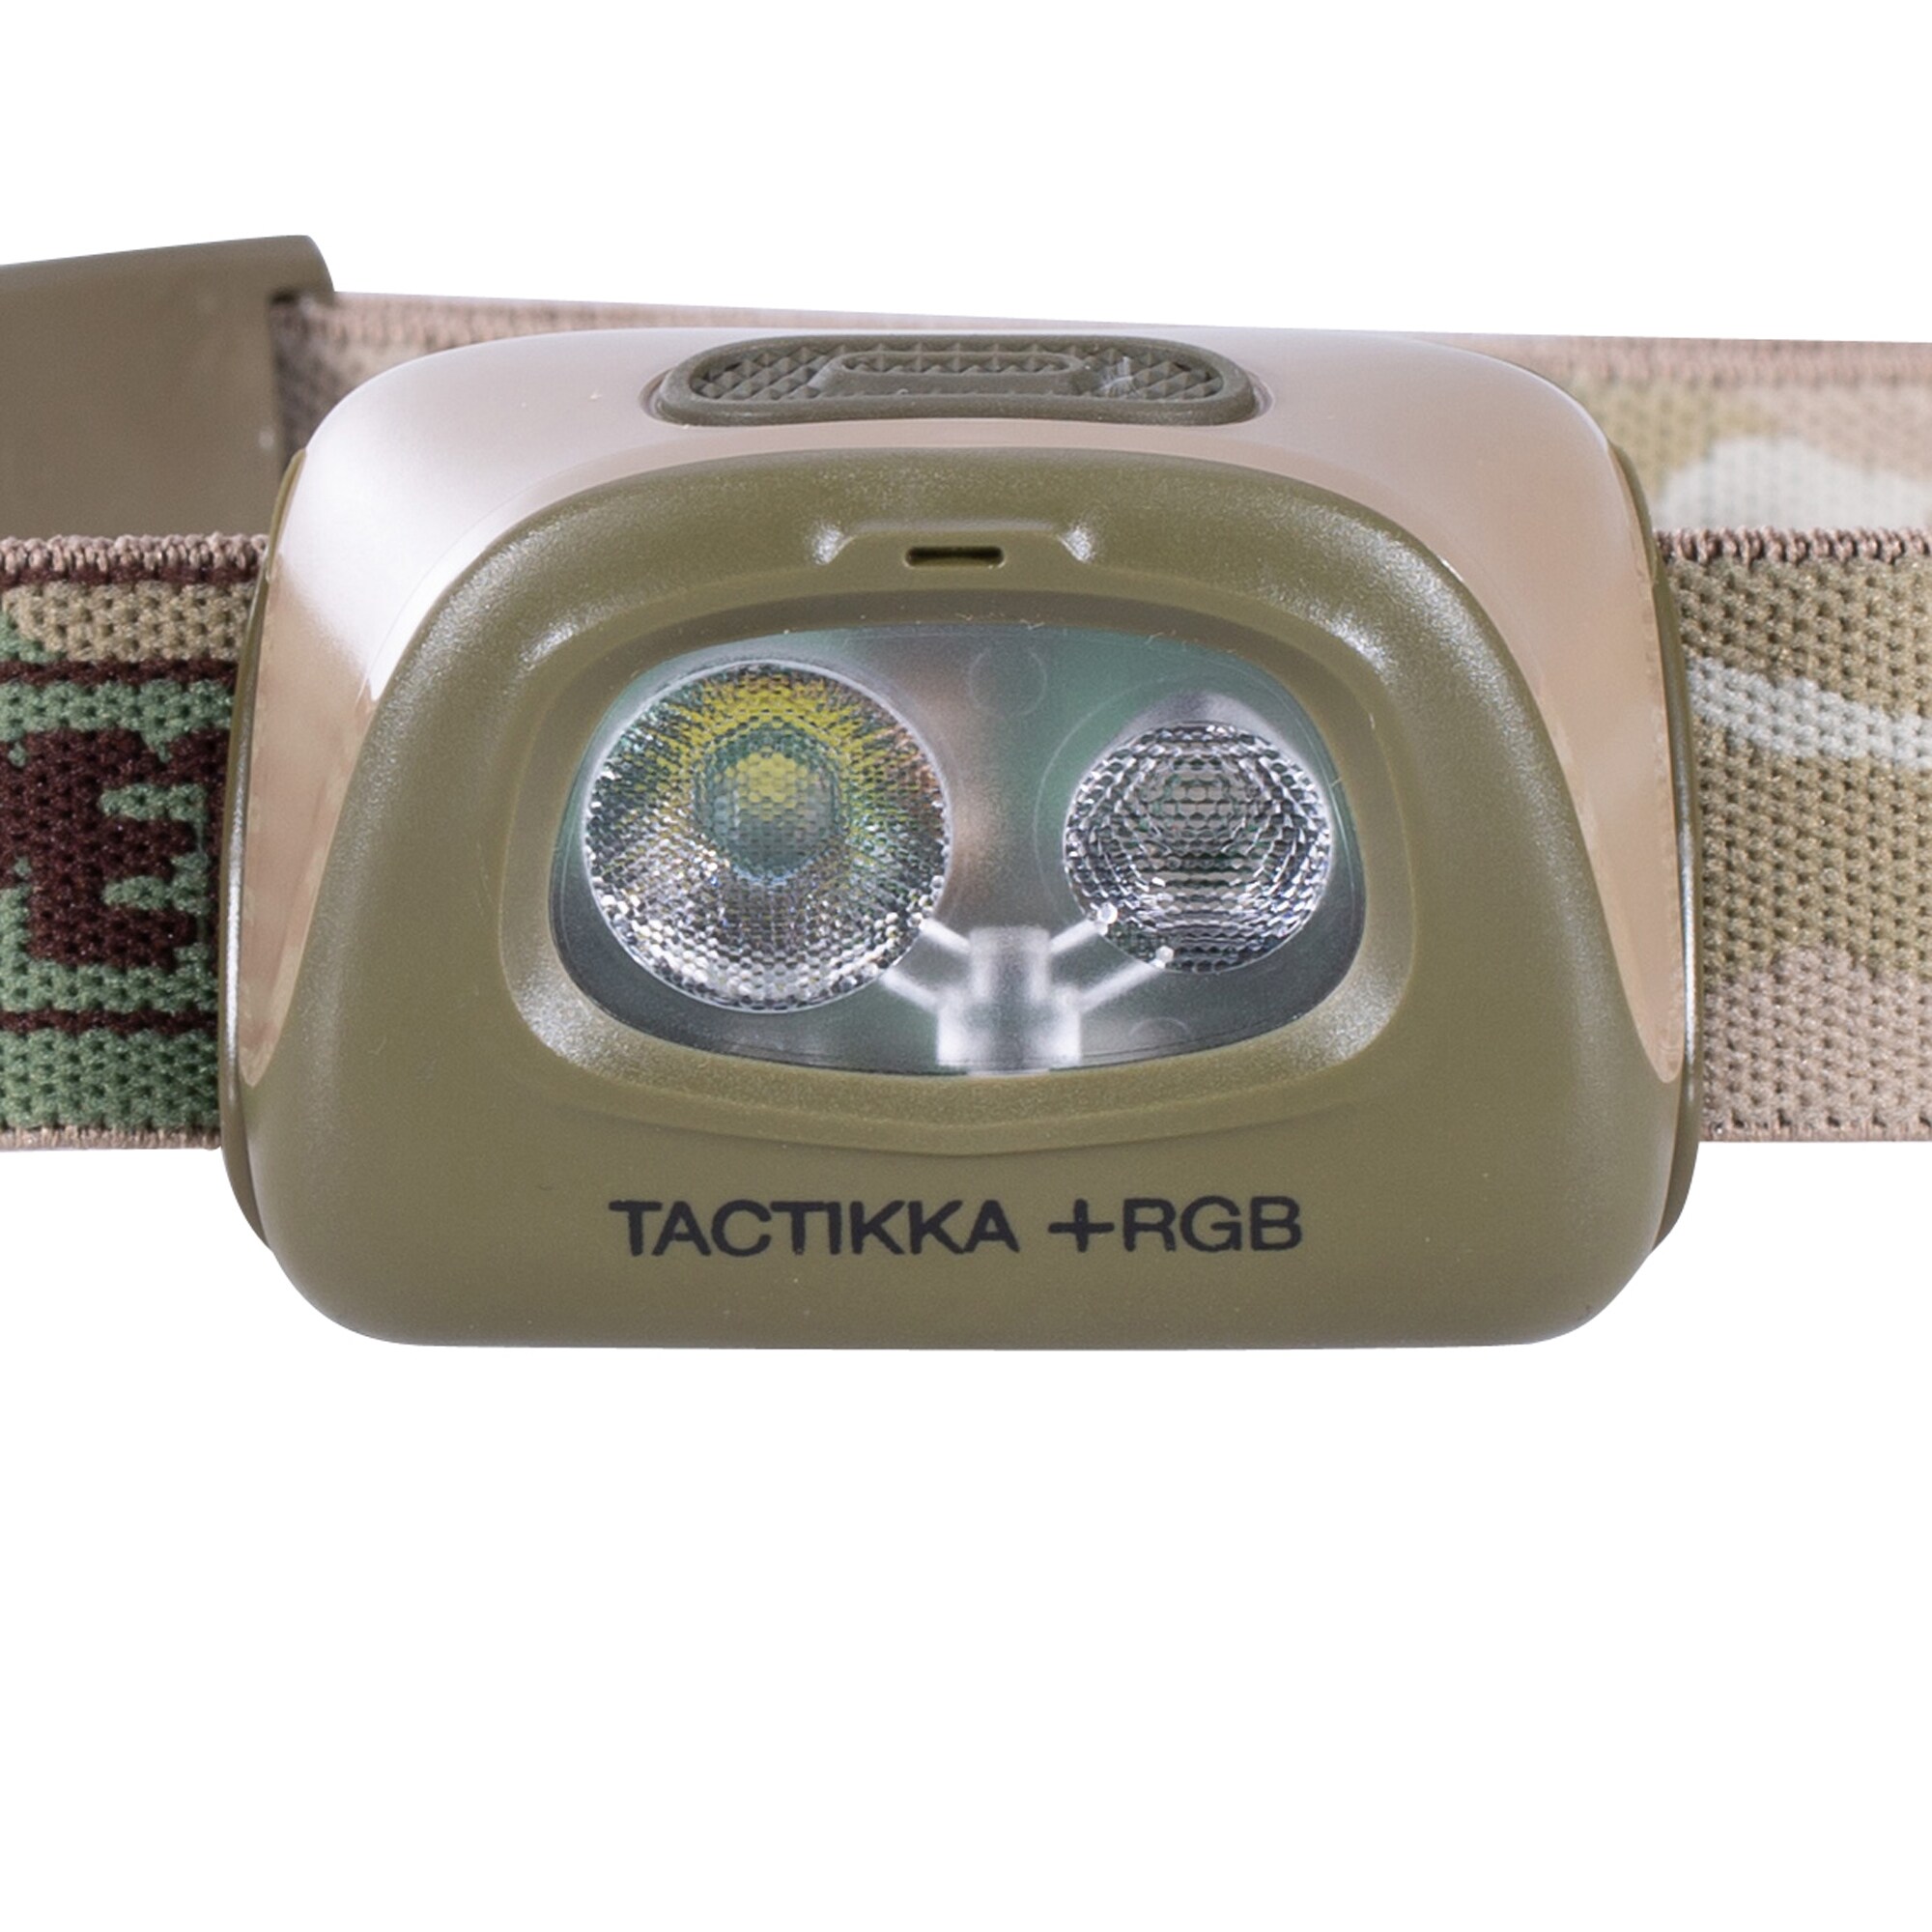 Stirnlampe Petzl Tactikka camouflage kaufen bei ASMC